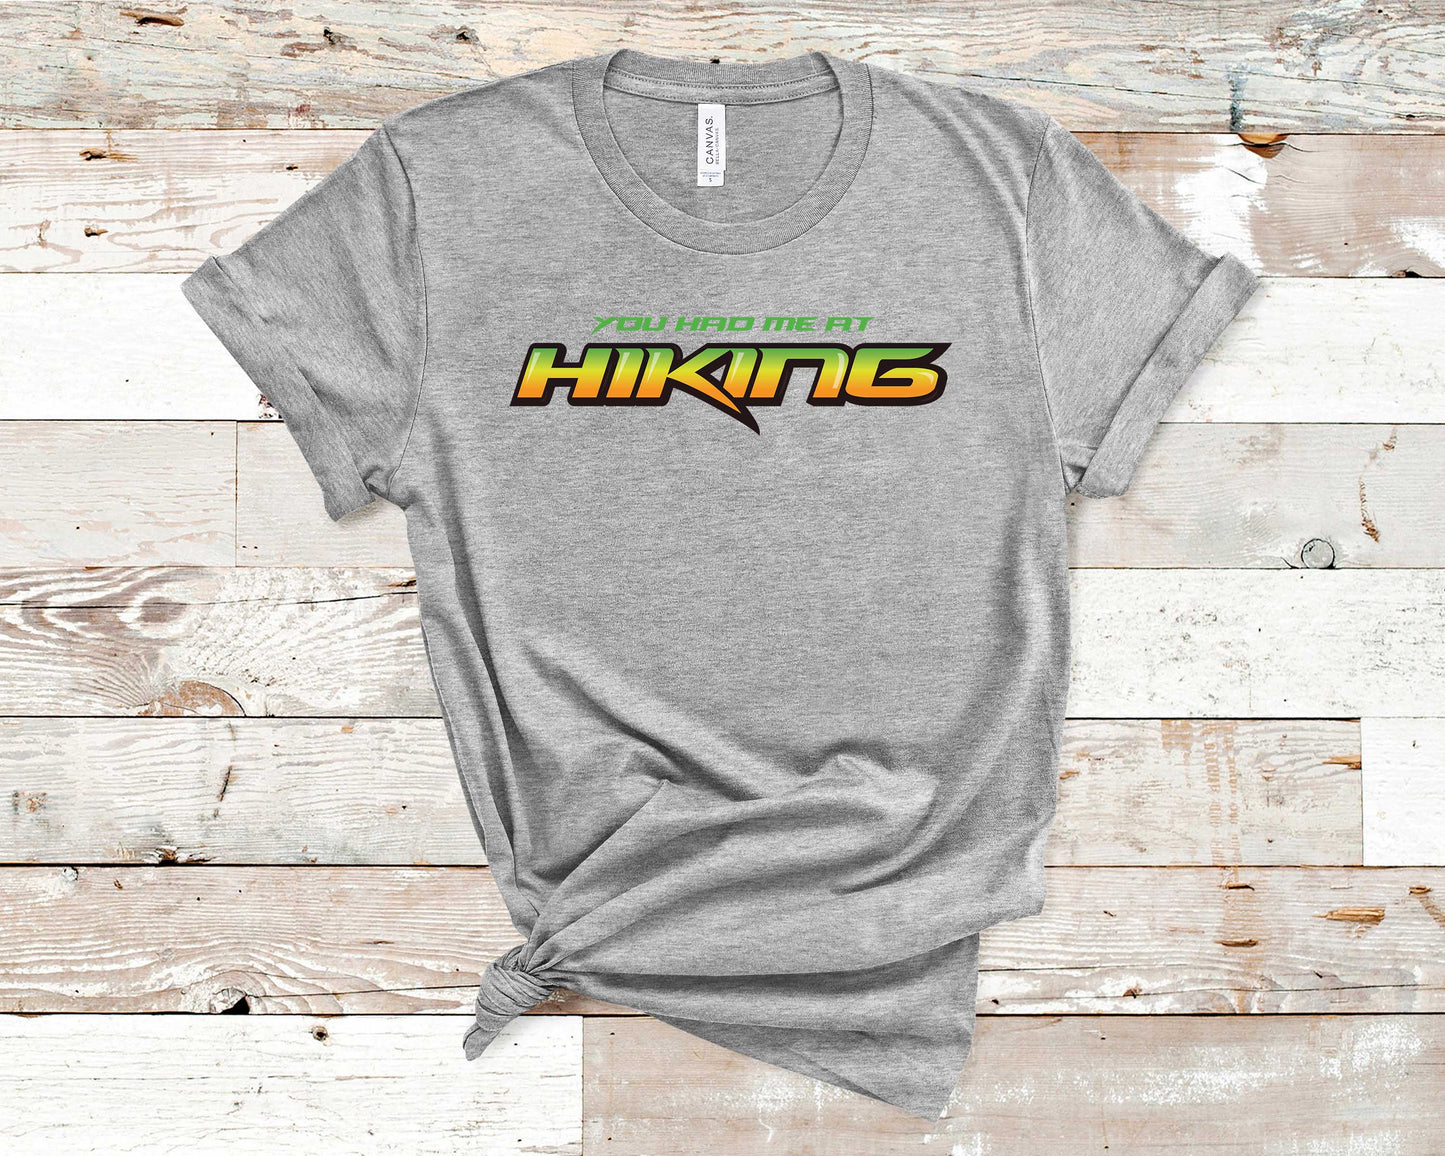 You Had Me at Hiking - Fitness Shirt